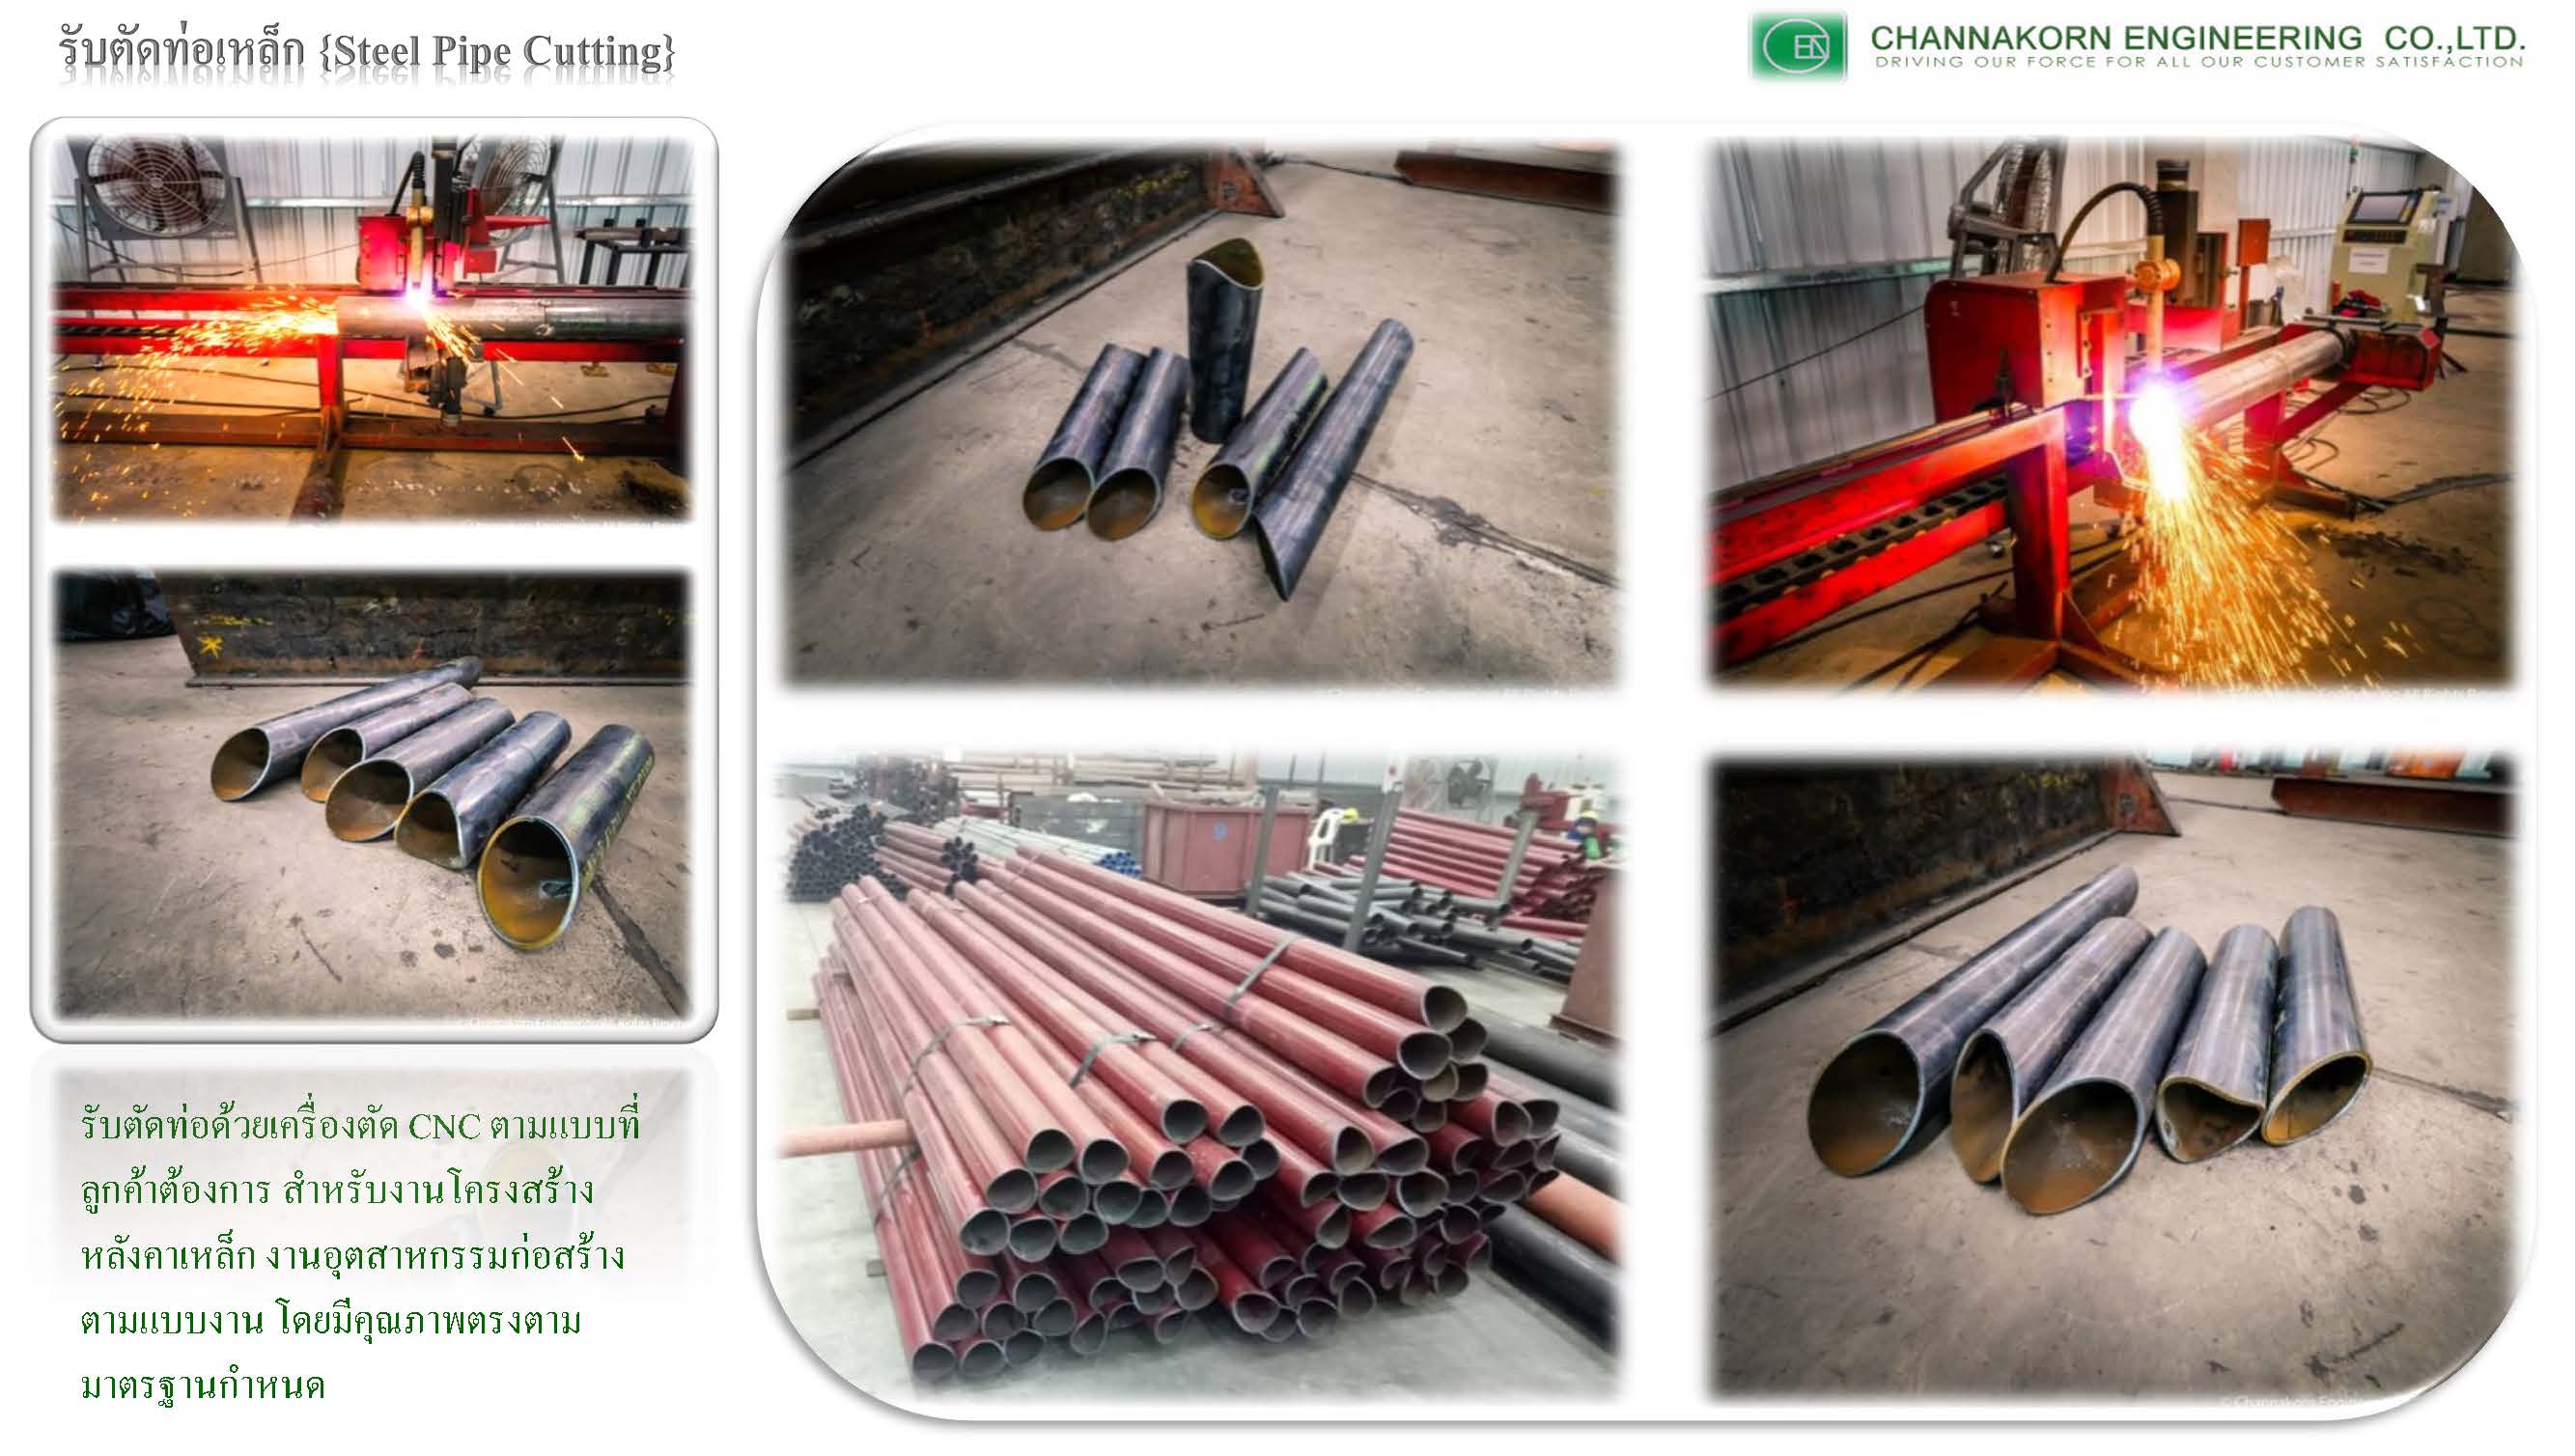 Sell Steel Pipe Cutting - Channakorn Engineering Co.,Ltd.